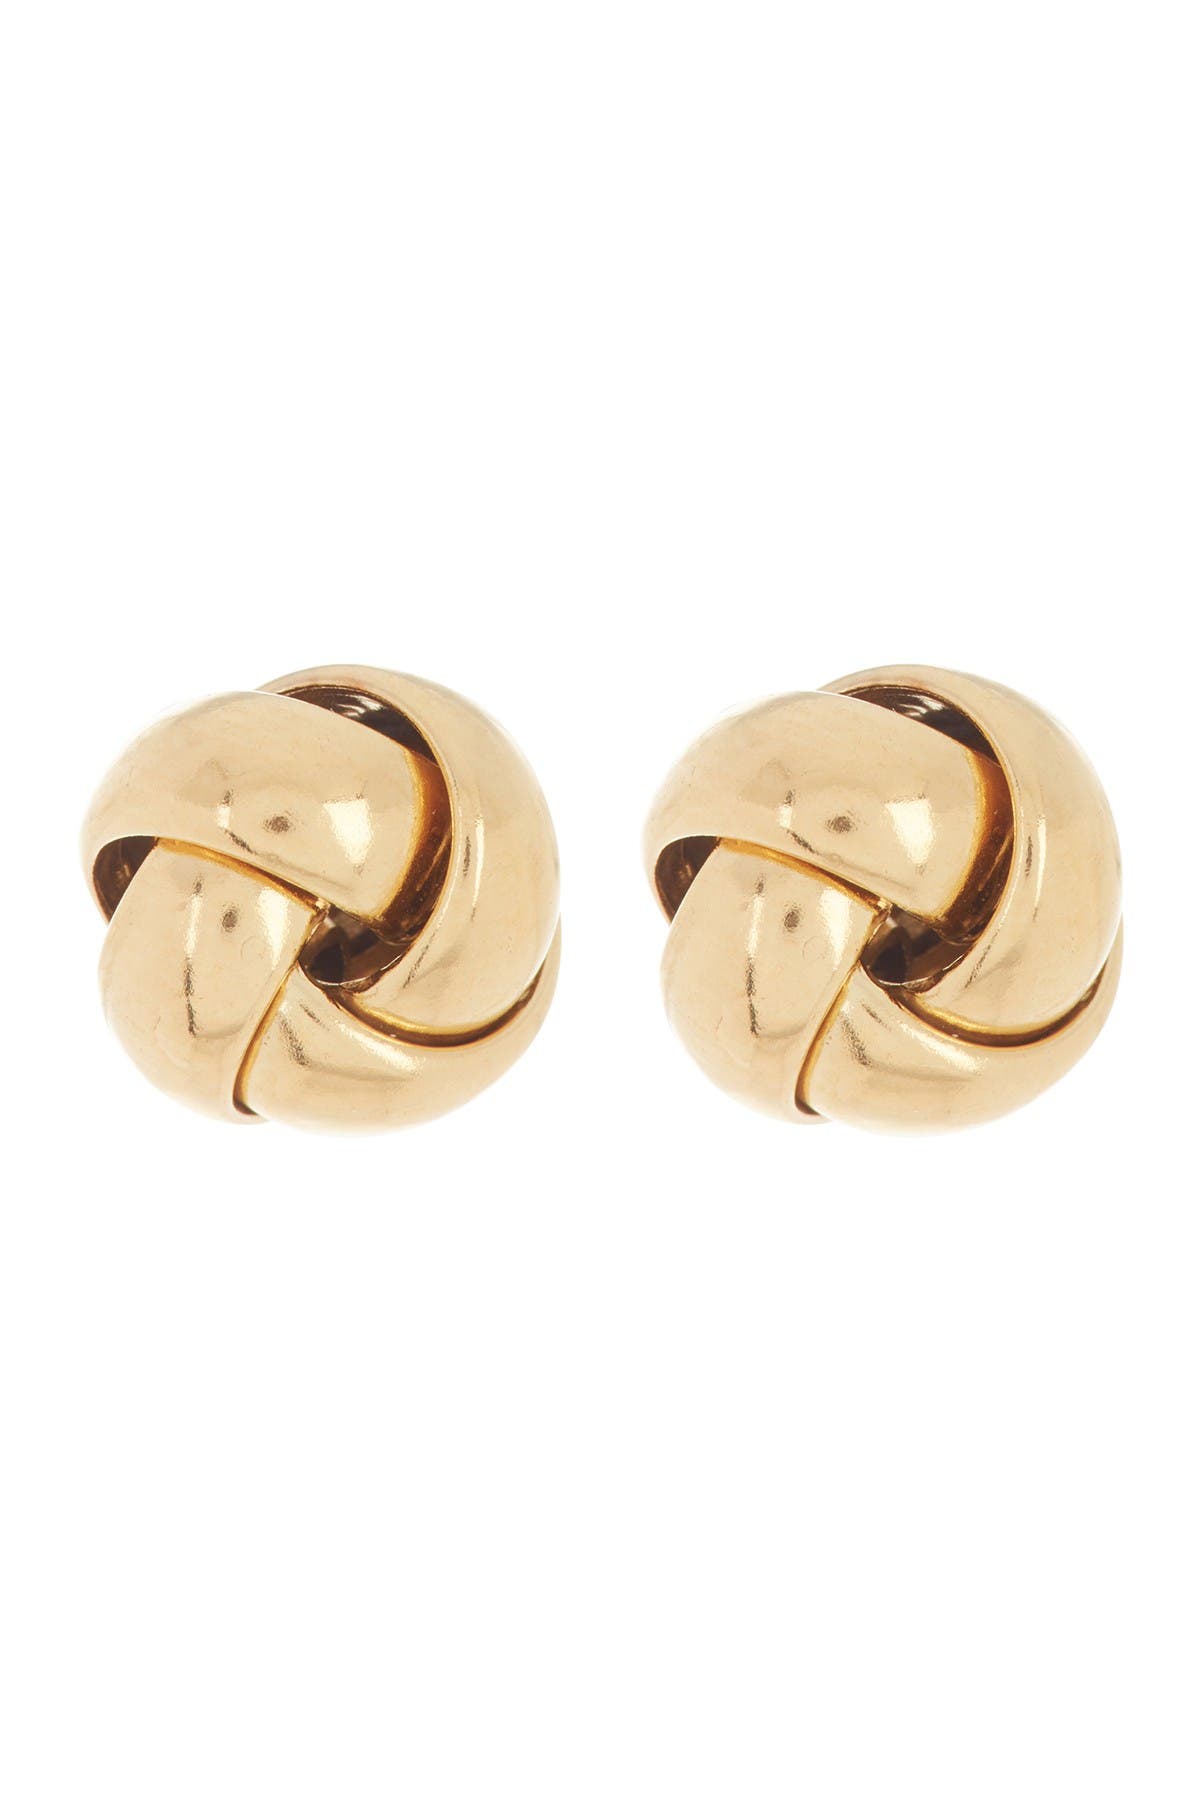 GLORIA Small Stud Earrings Silver Coin Earrings Silver Disc Earrings Gold Plated Disc Studs Gold Coin Earrings Textured Earrings